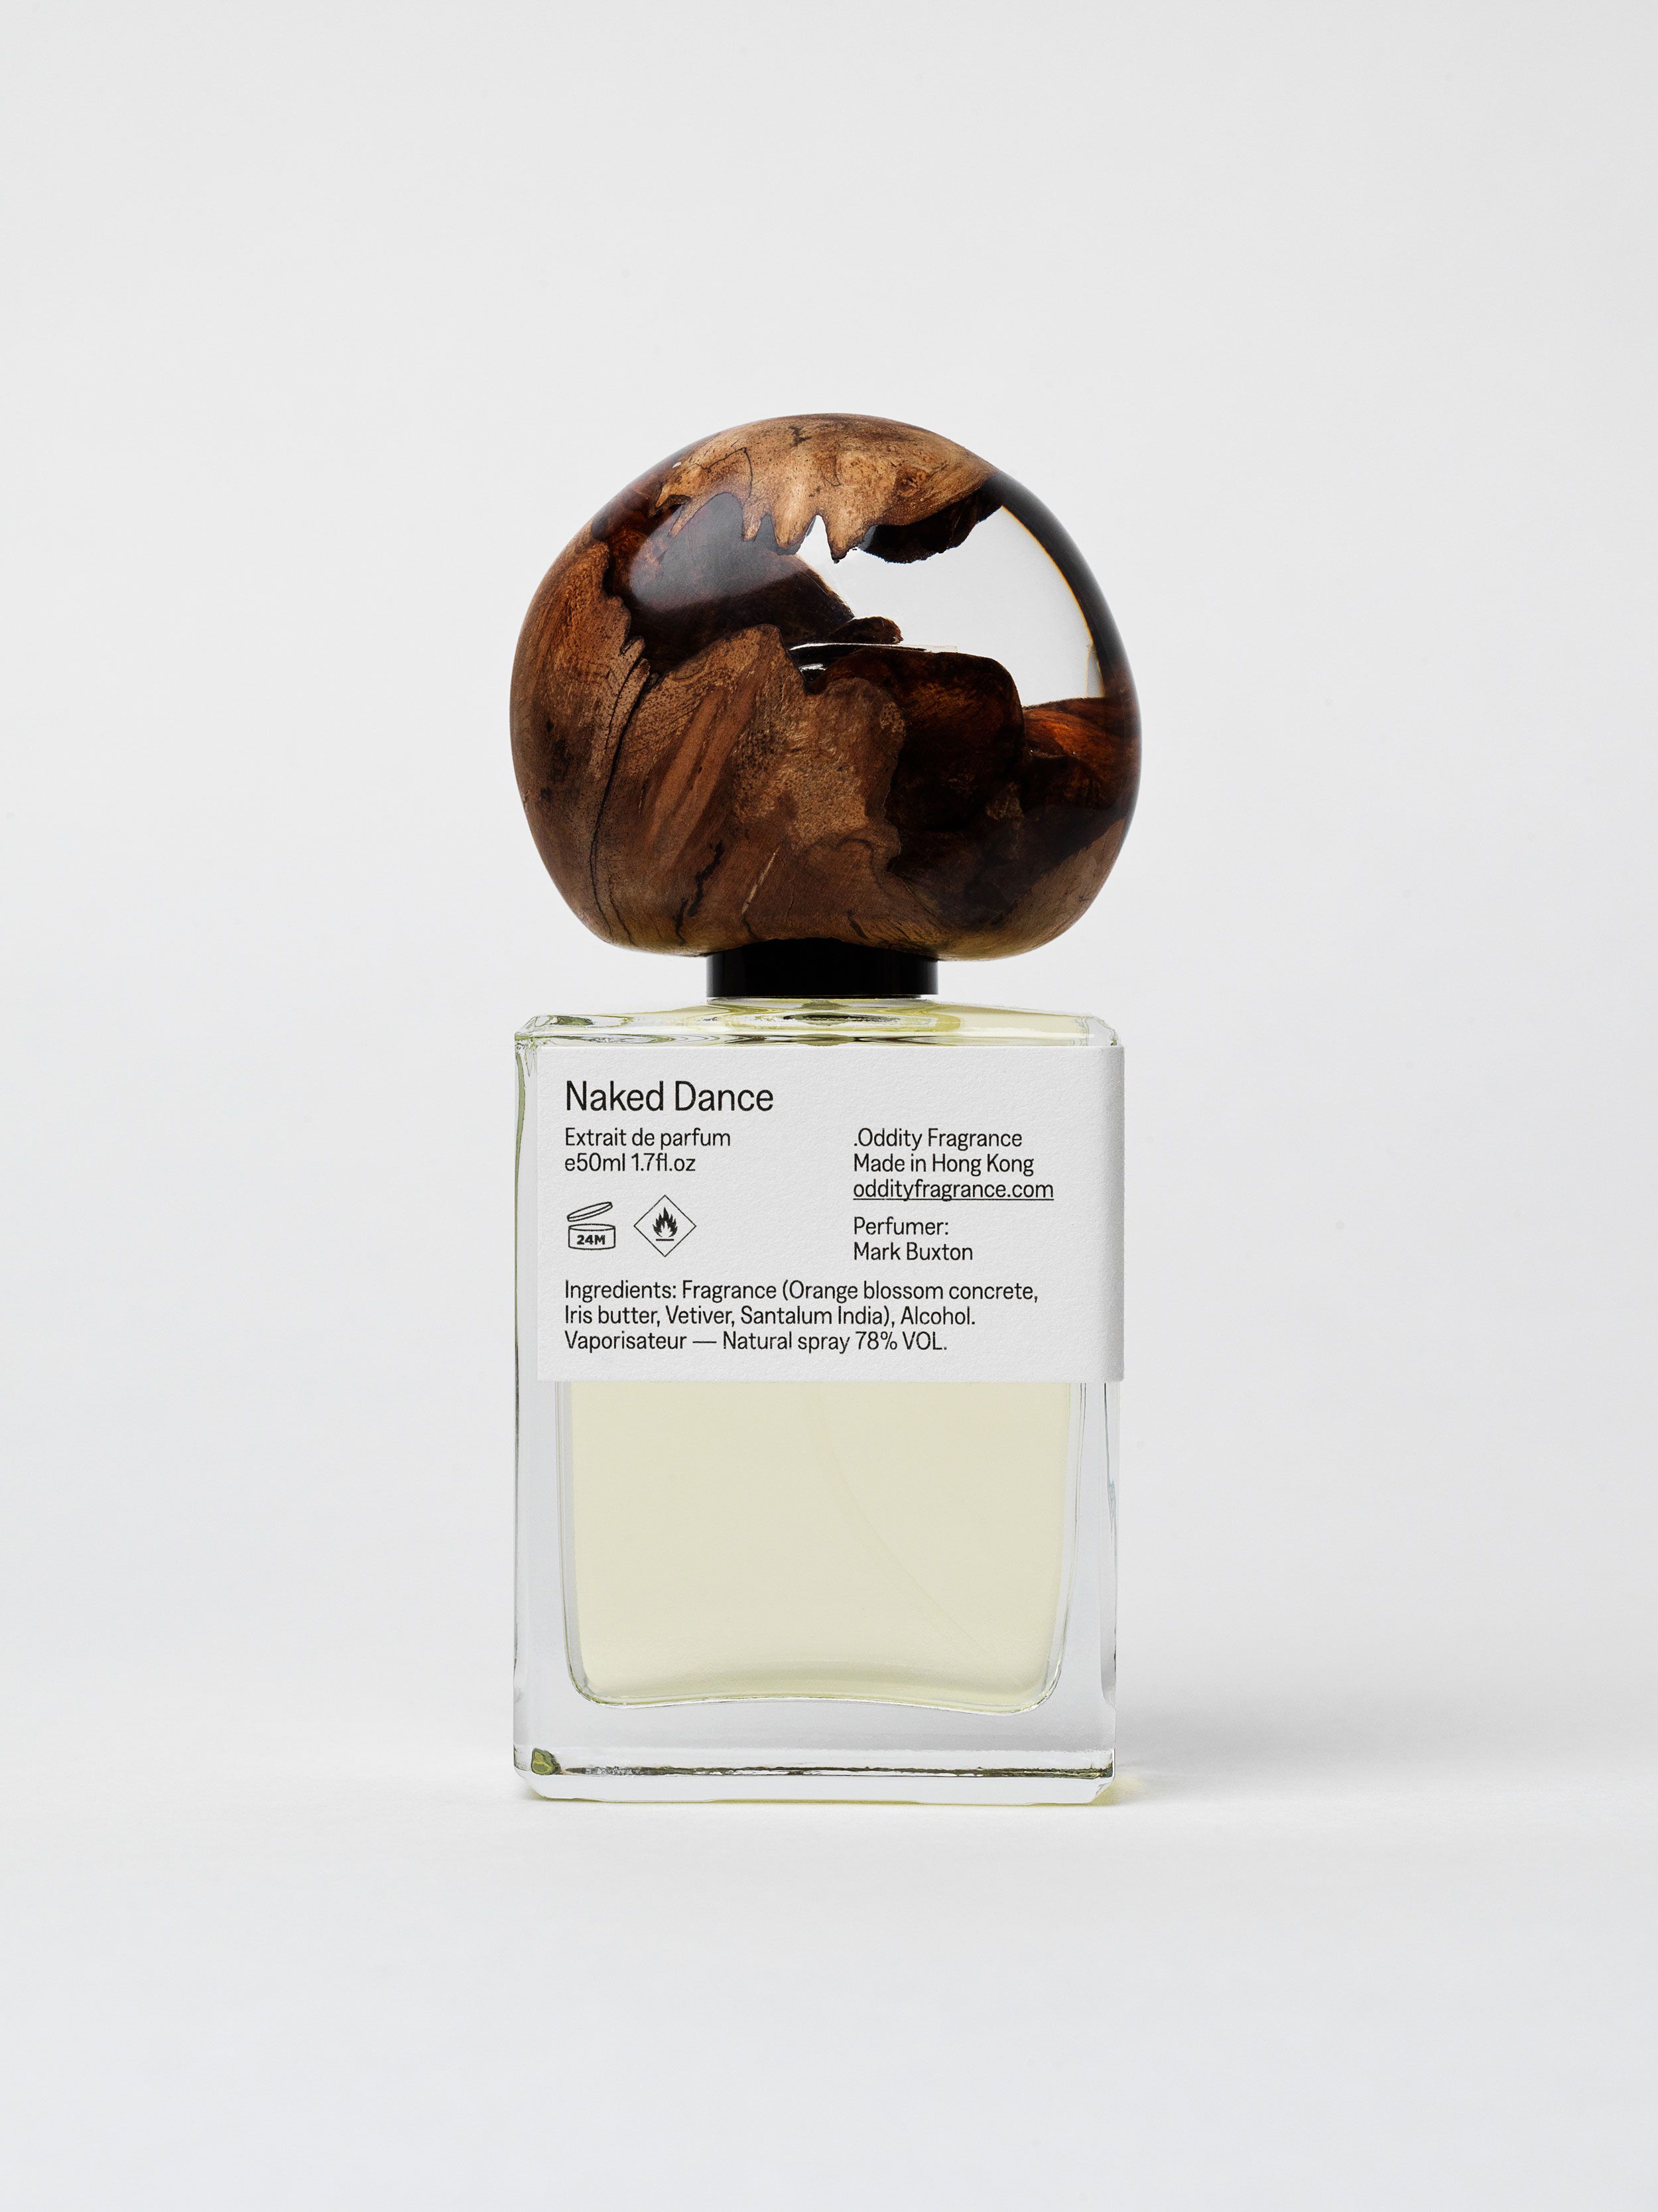 Dead Air extrait de parfume — .Oddity Fragrance